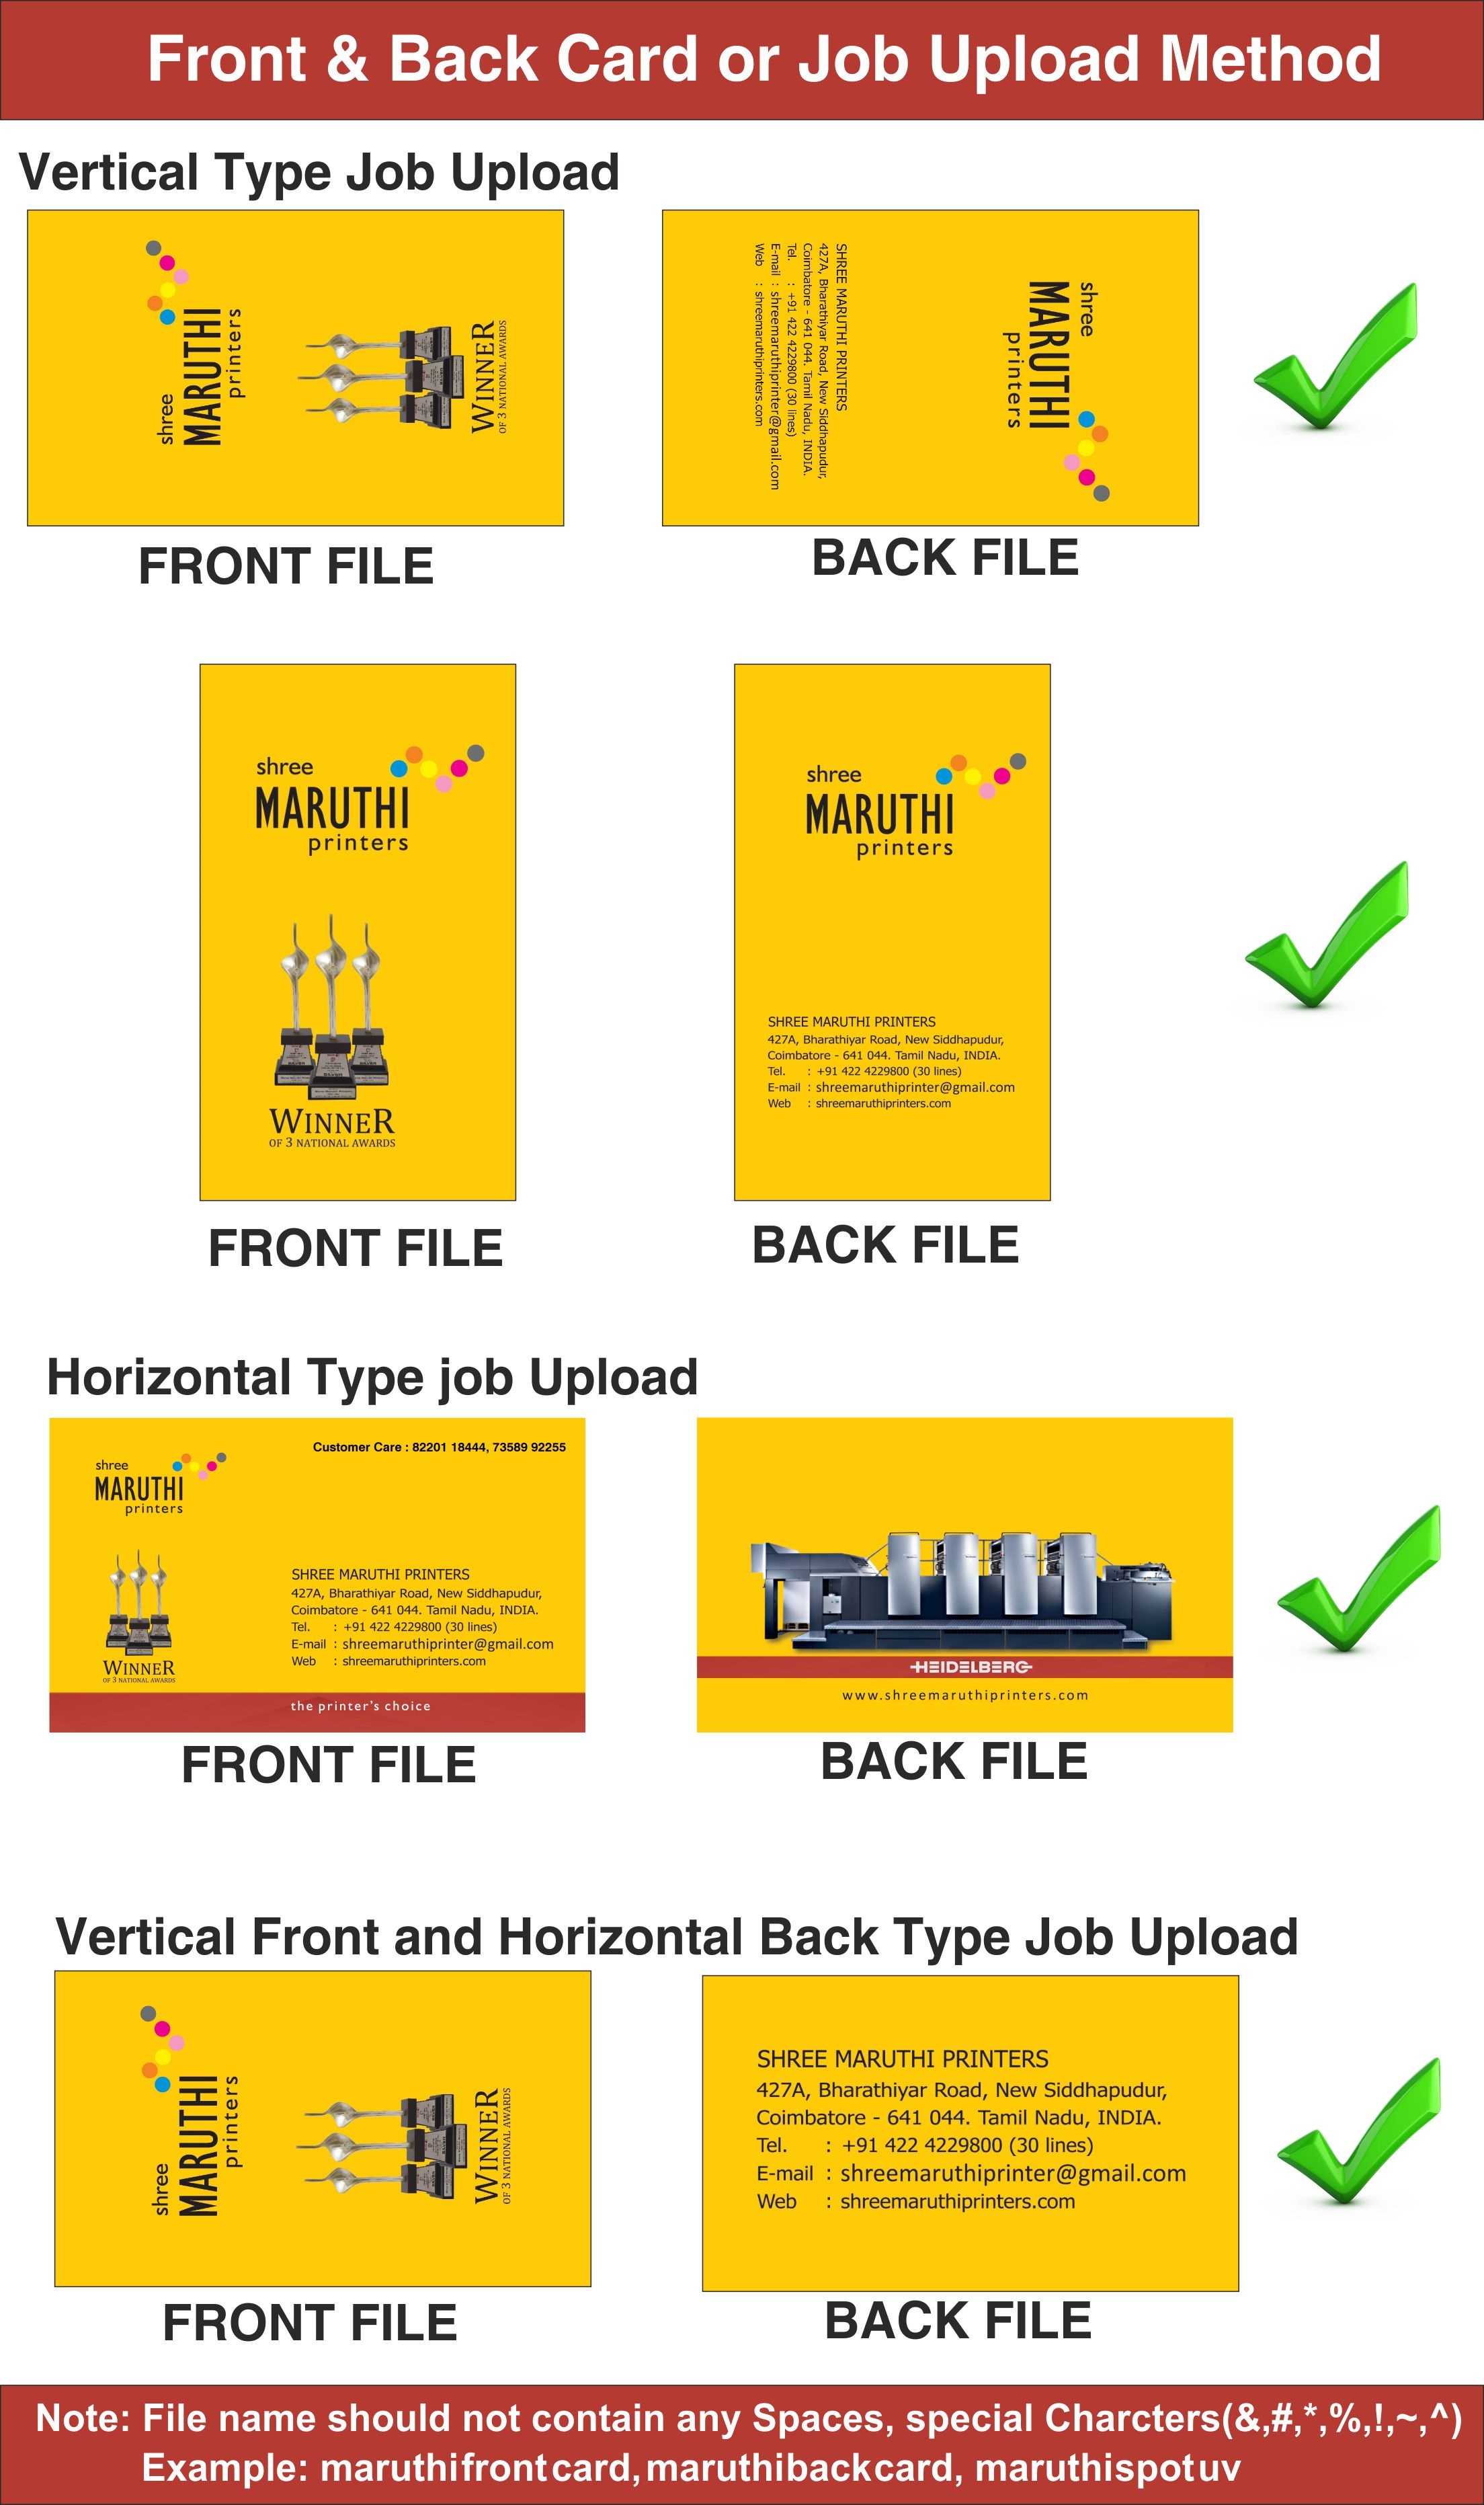 Front and Back card Upload method